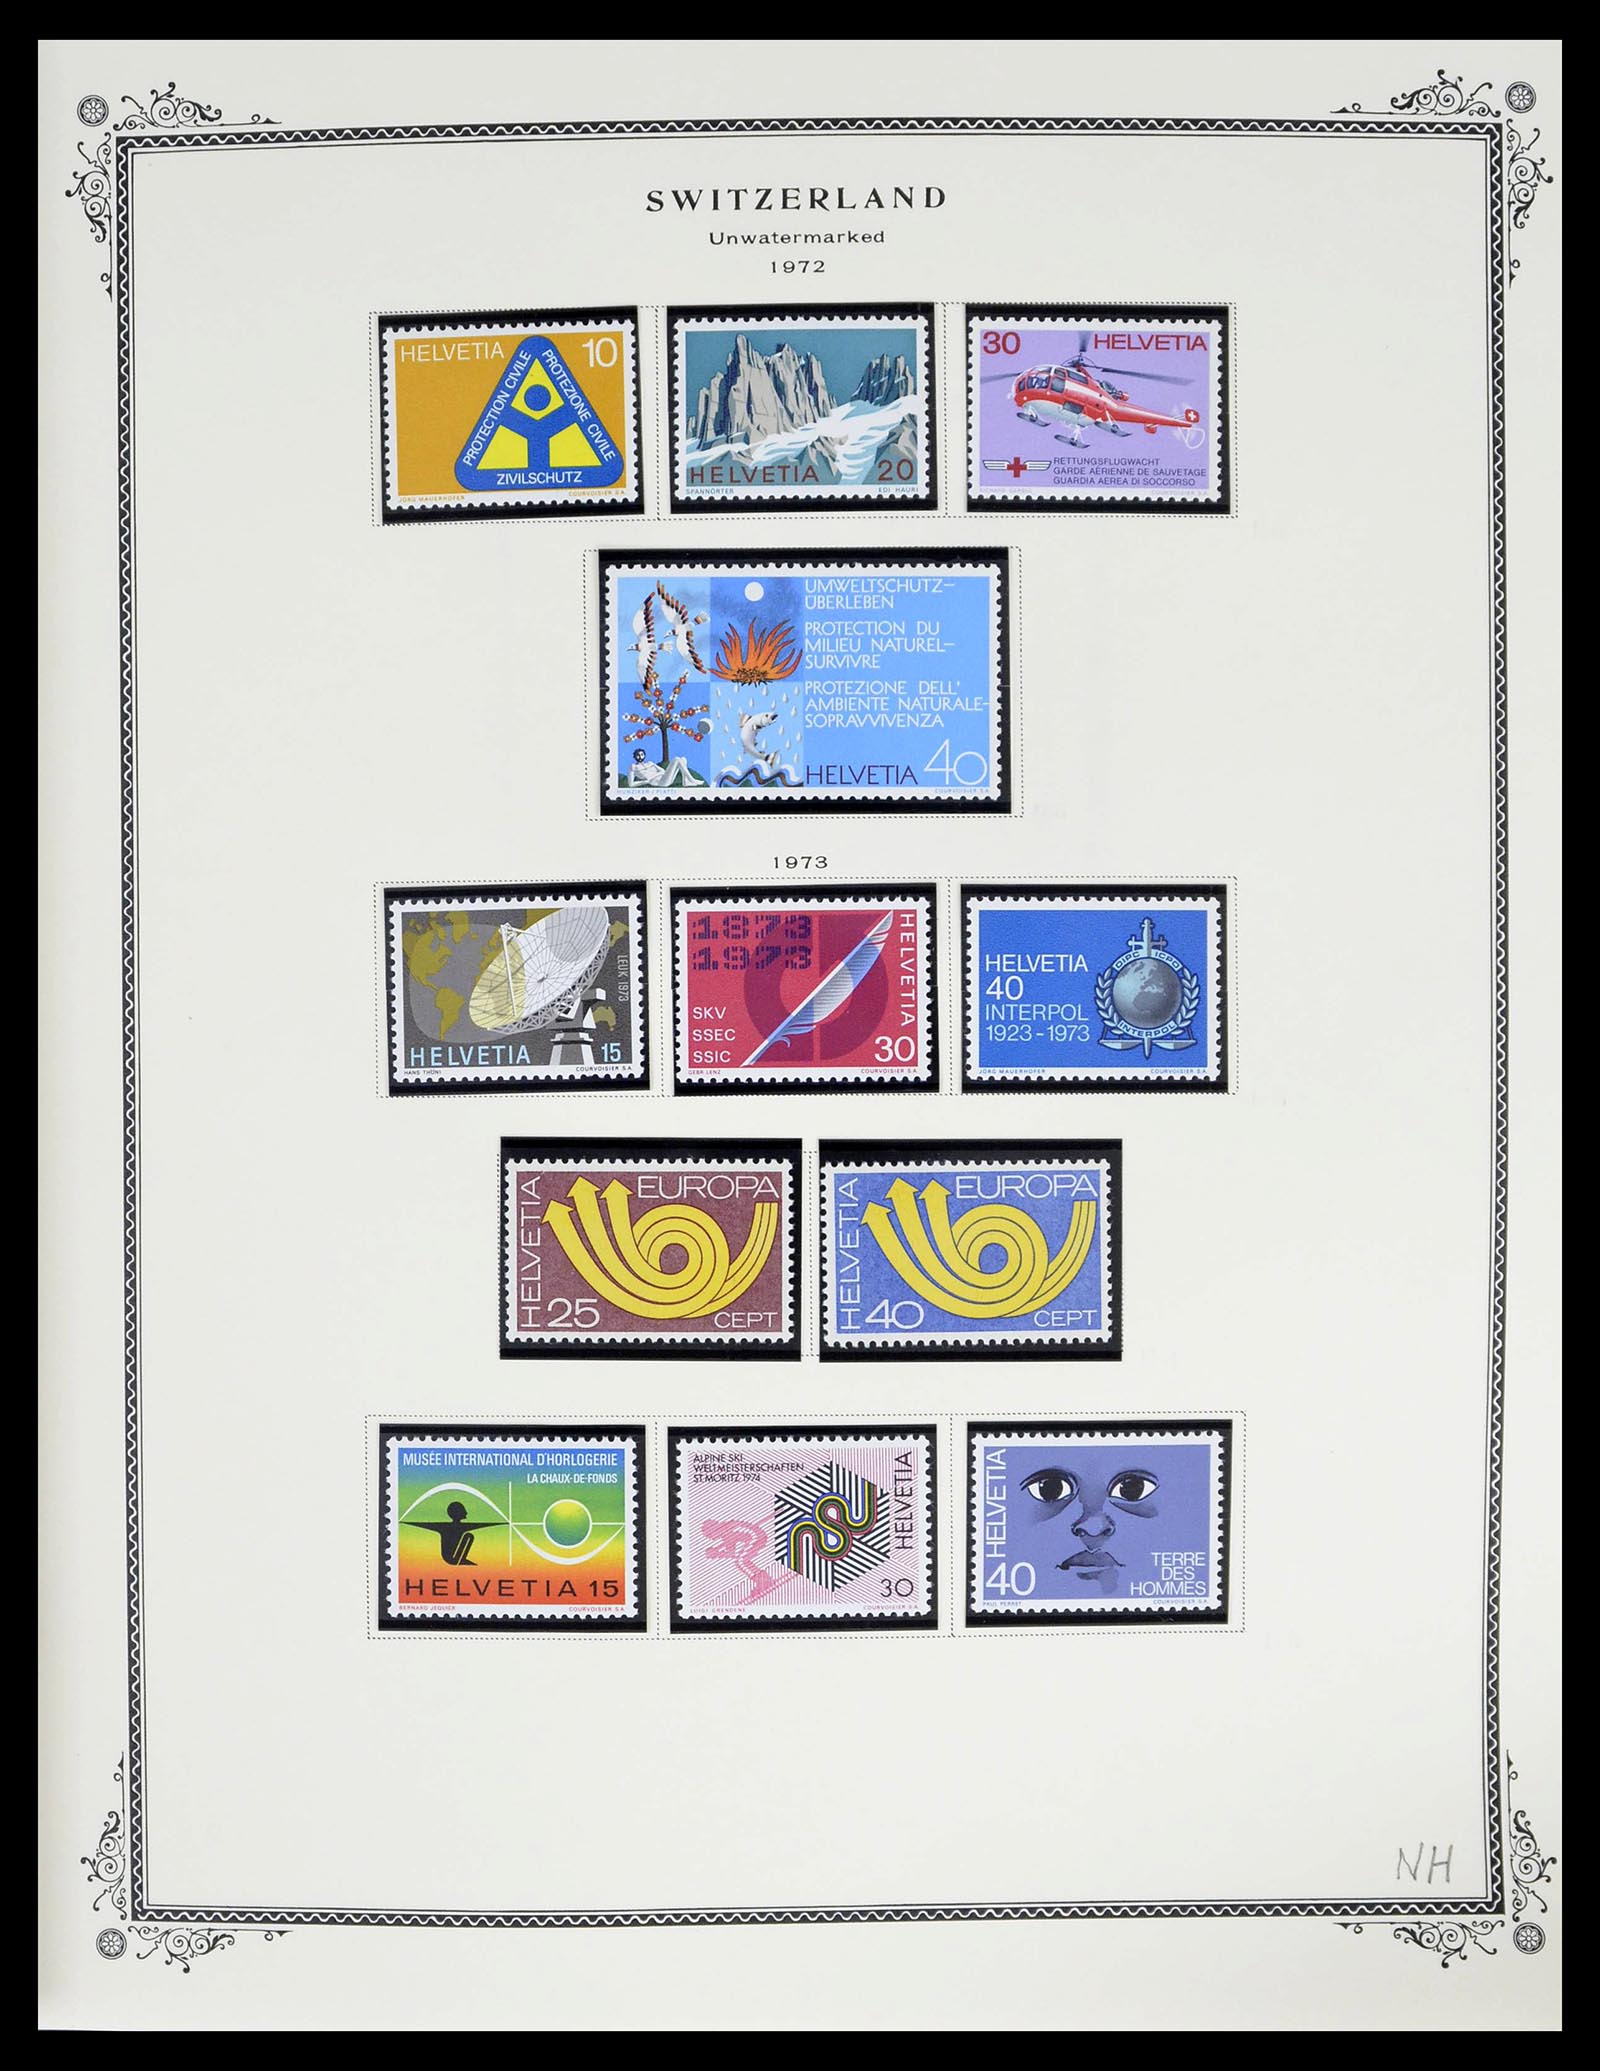 39178 0080 - Stamp collection 39178 Switzerland 1850-1989.